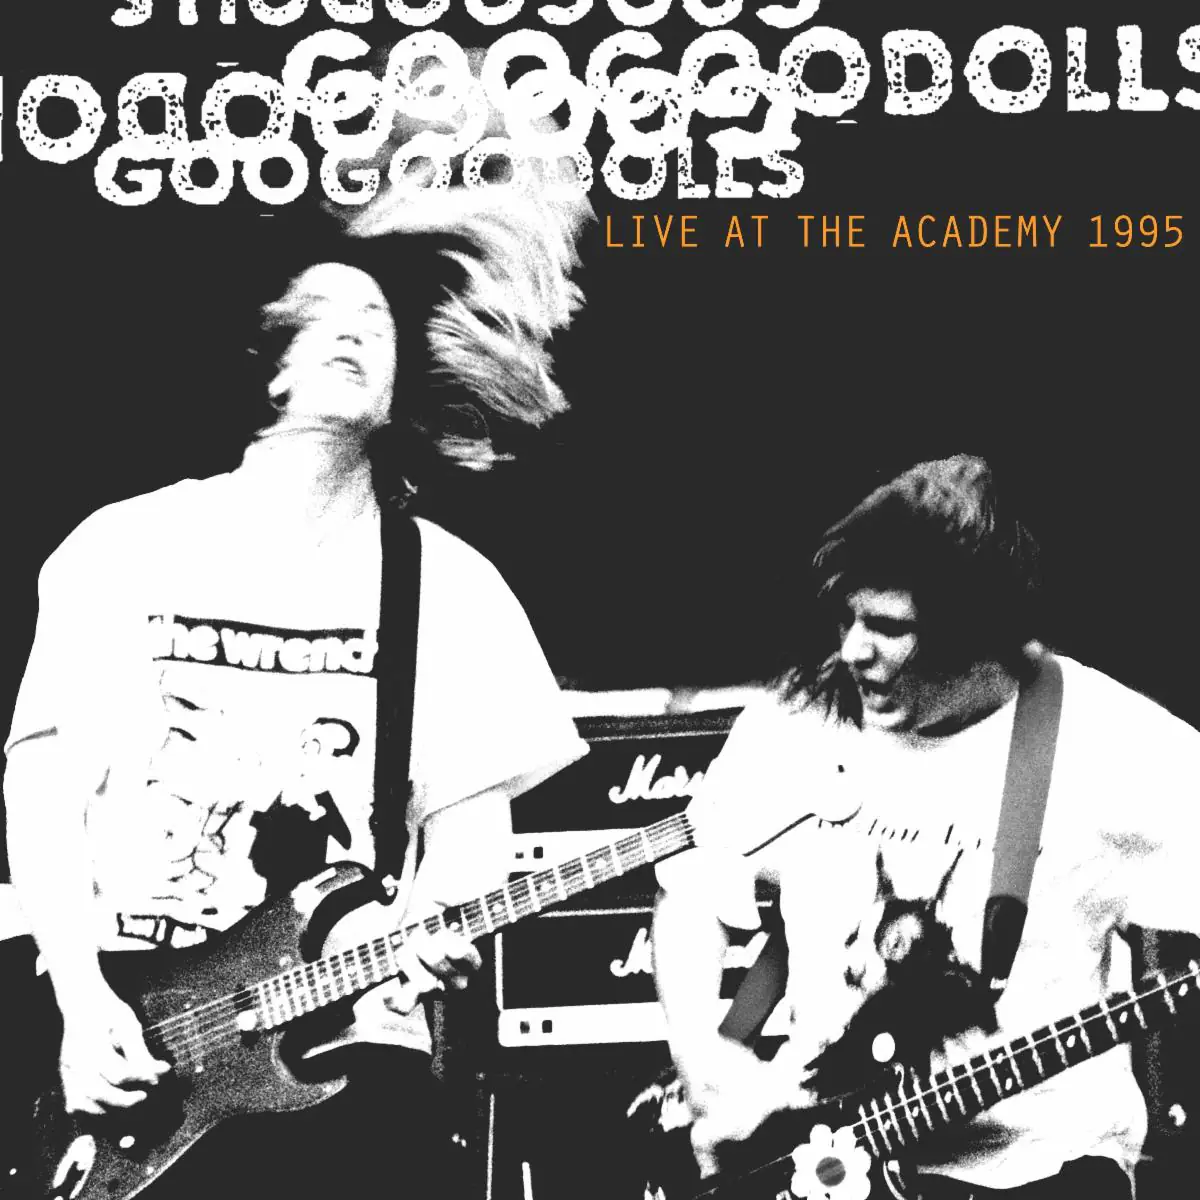 ALBUM REVIEW: Goo Goo Dolls – Live at The Academy 1995